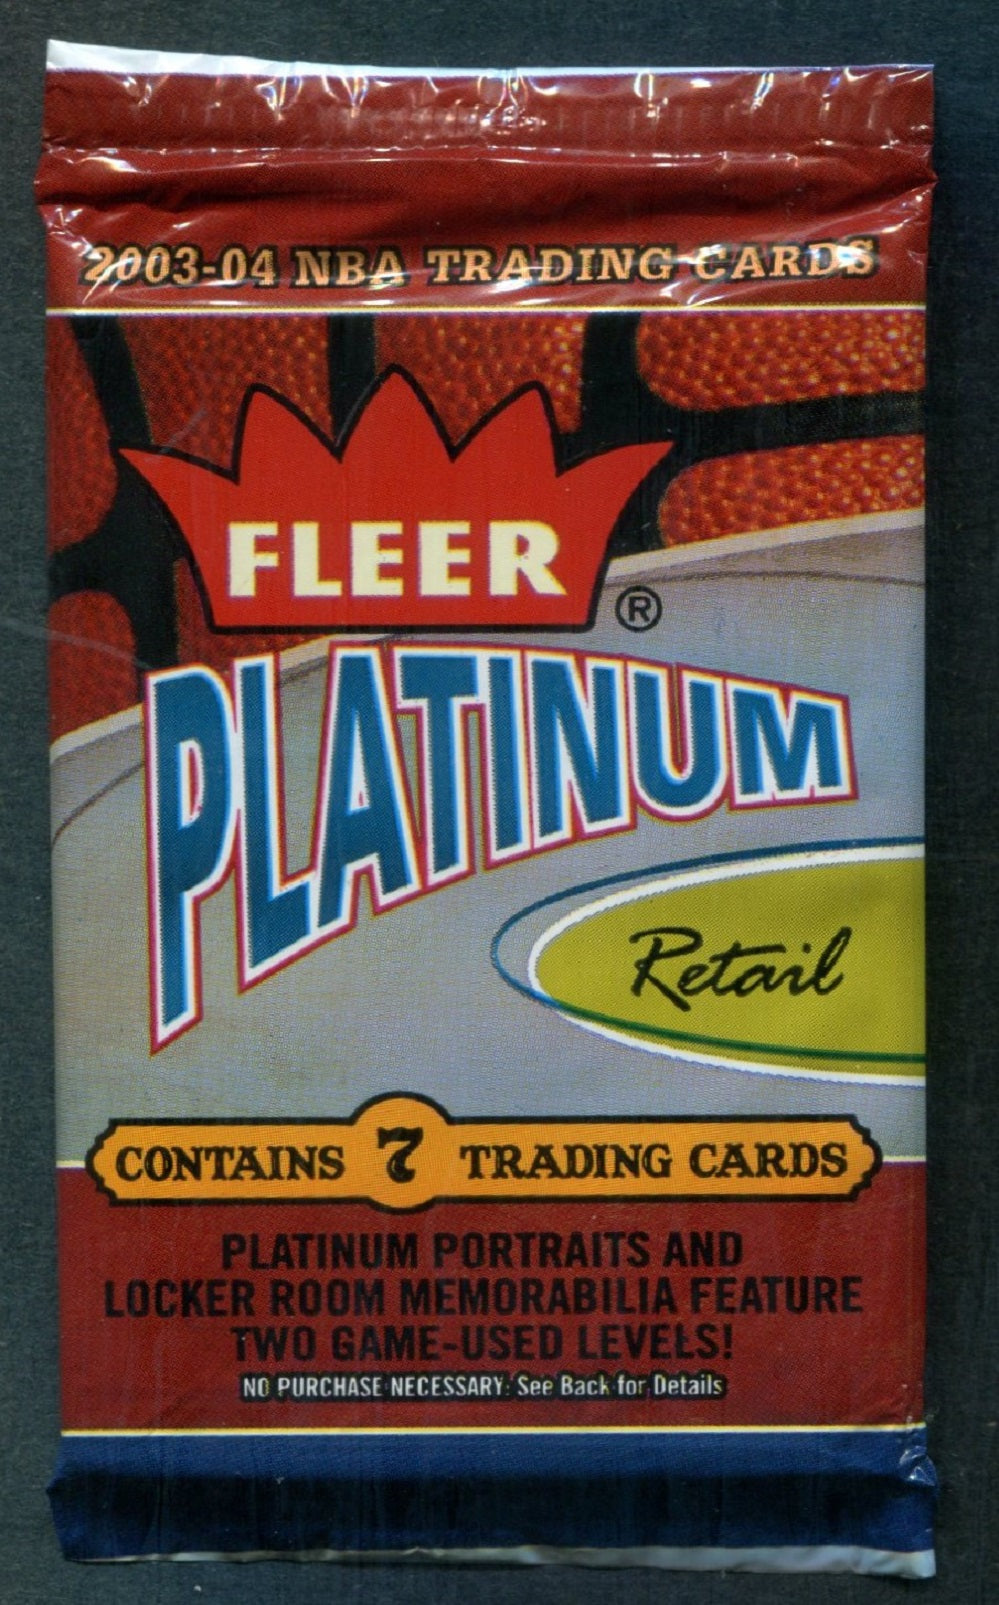 2003/04 Fleer Platinum Basketball Unopened Pack (Retail)